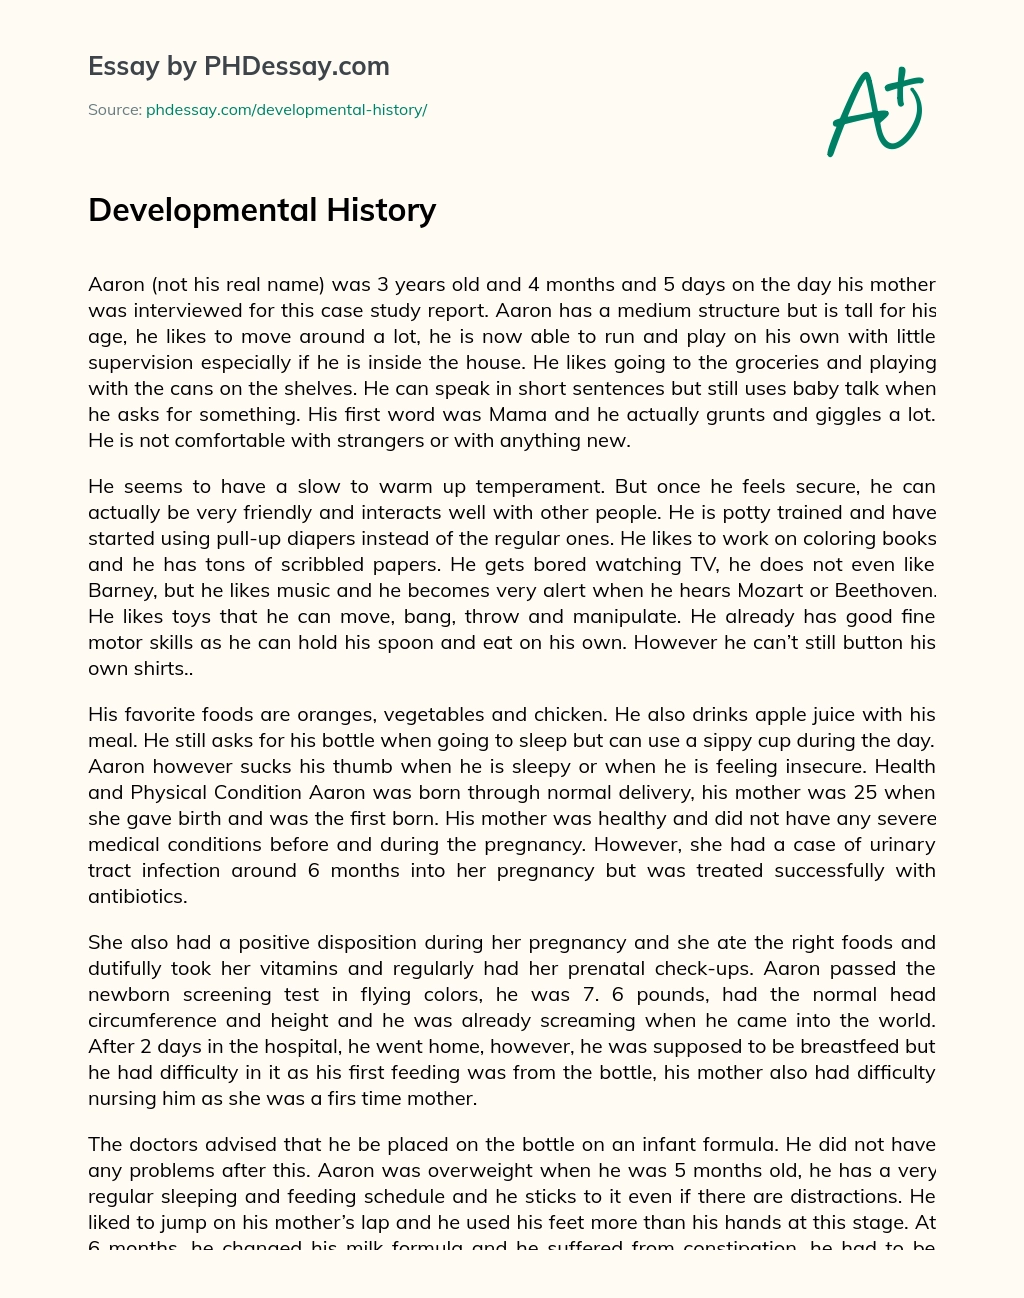 Developmental History essay